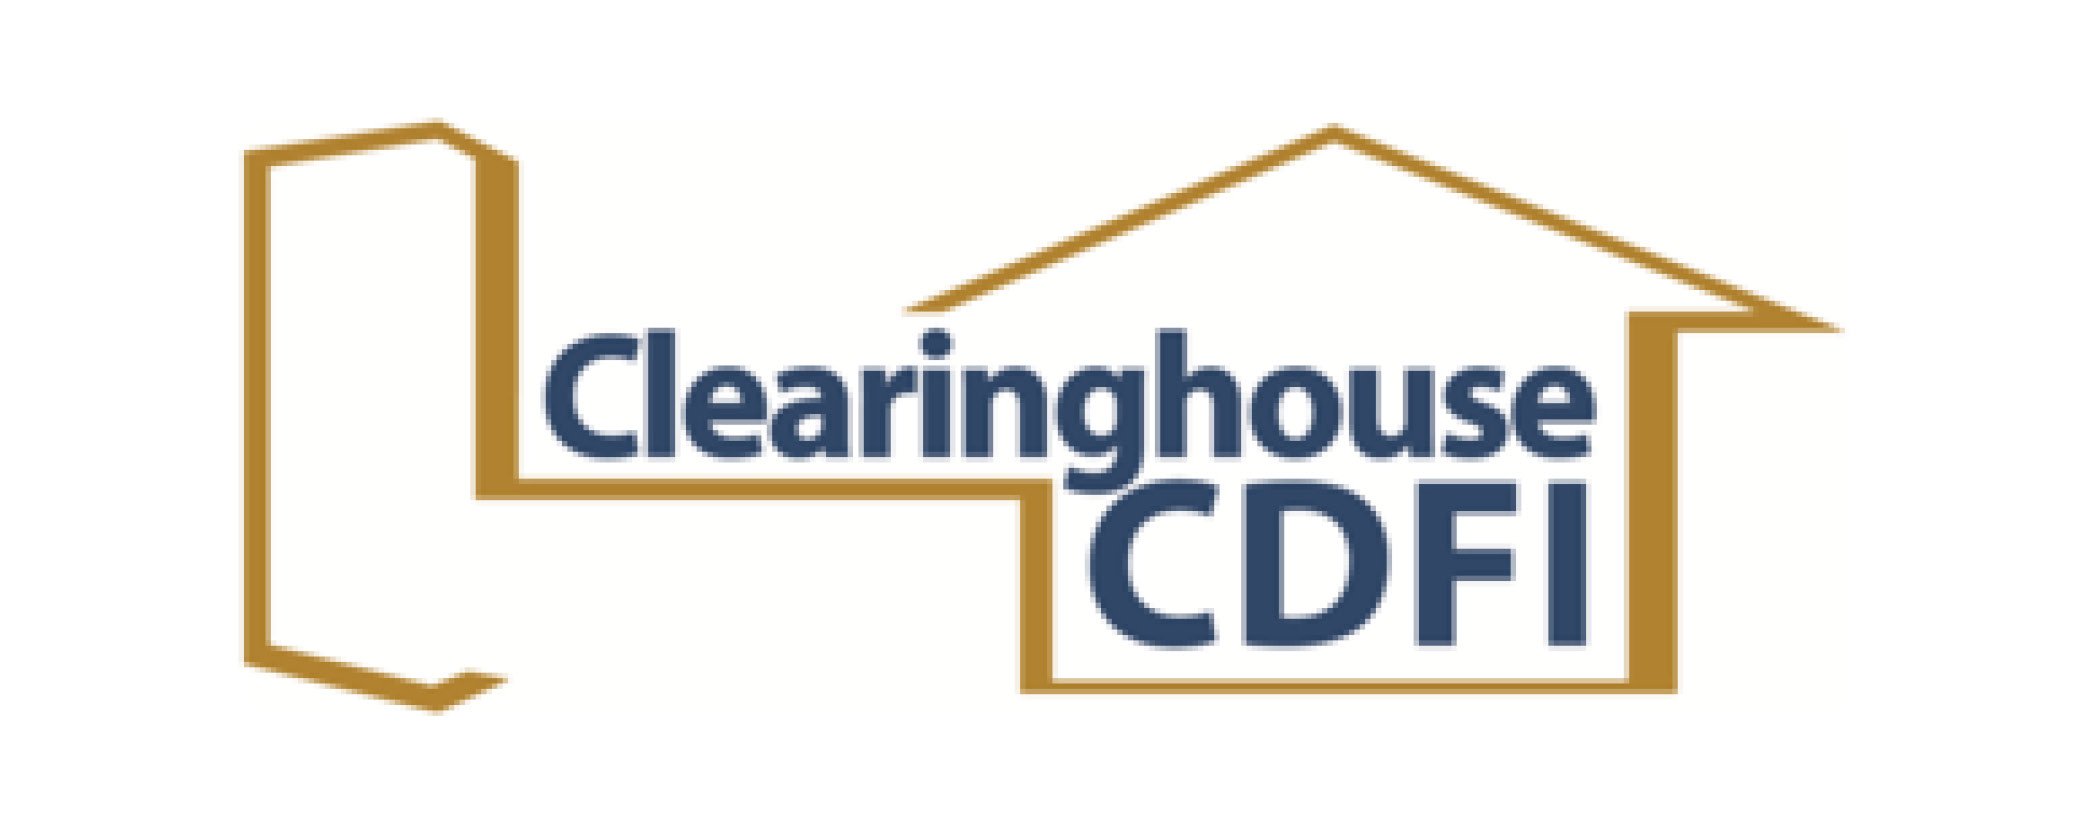 Clearinghouse CDFI.jpg